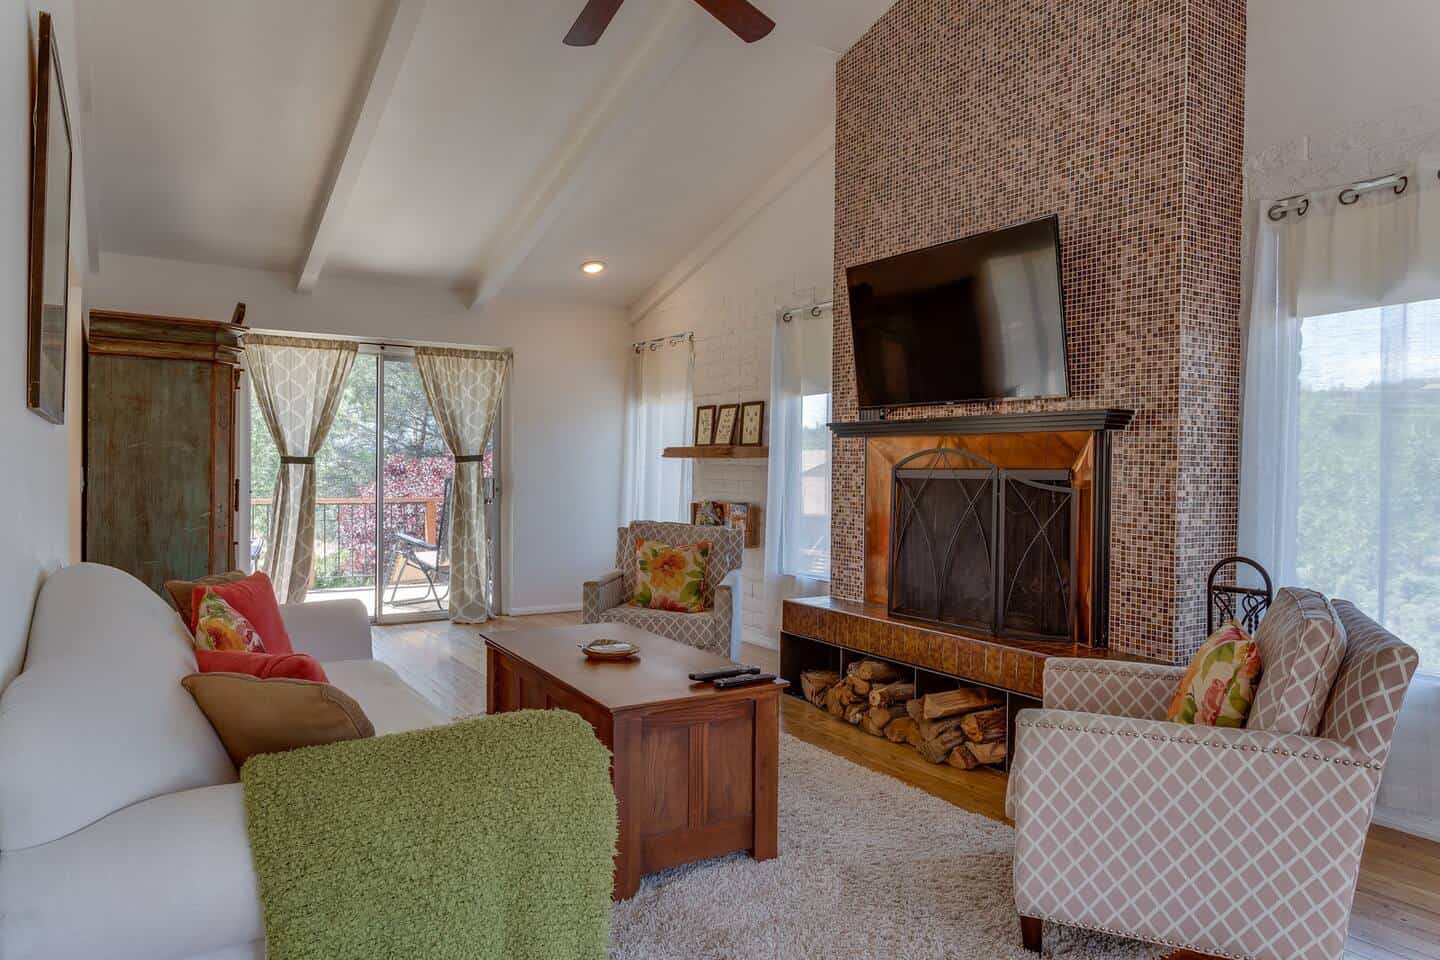 Image of Airbnb rental in Sedona Arizona